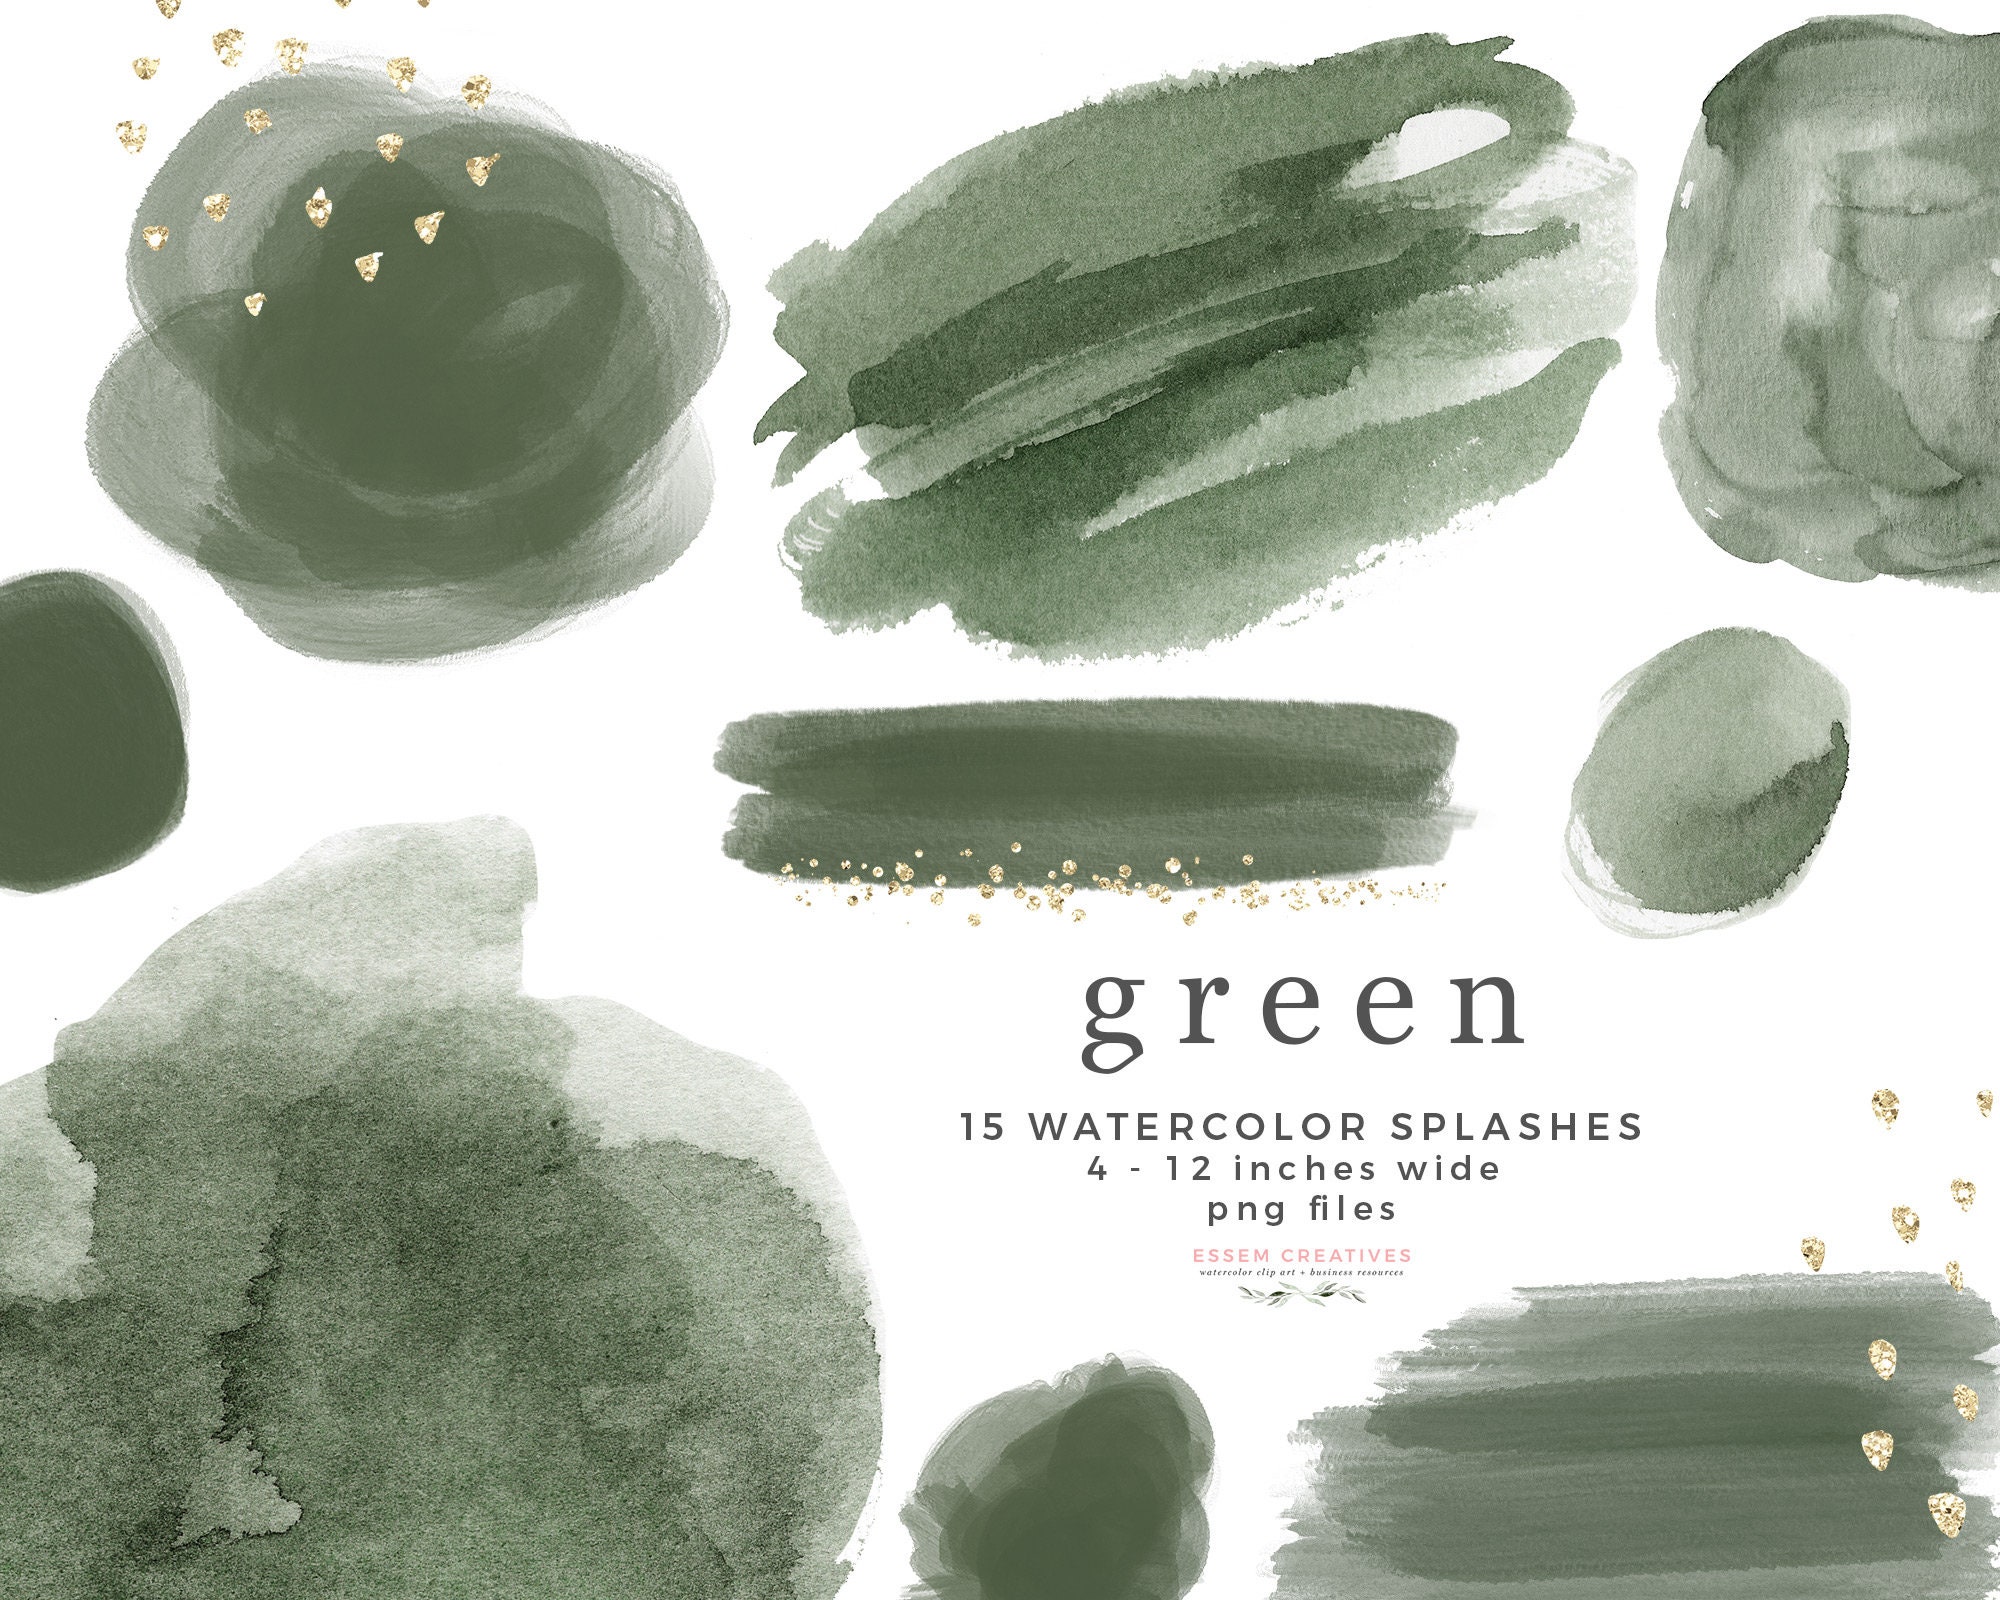 Dark Olive Green Background. Seamless Solid Color Tone Stock Illustration -  Illustration of background, blossomink: 242340796